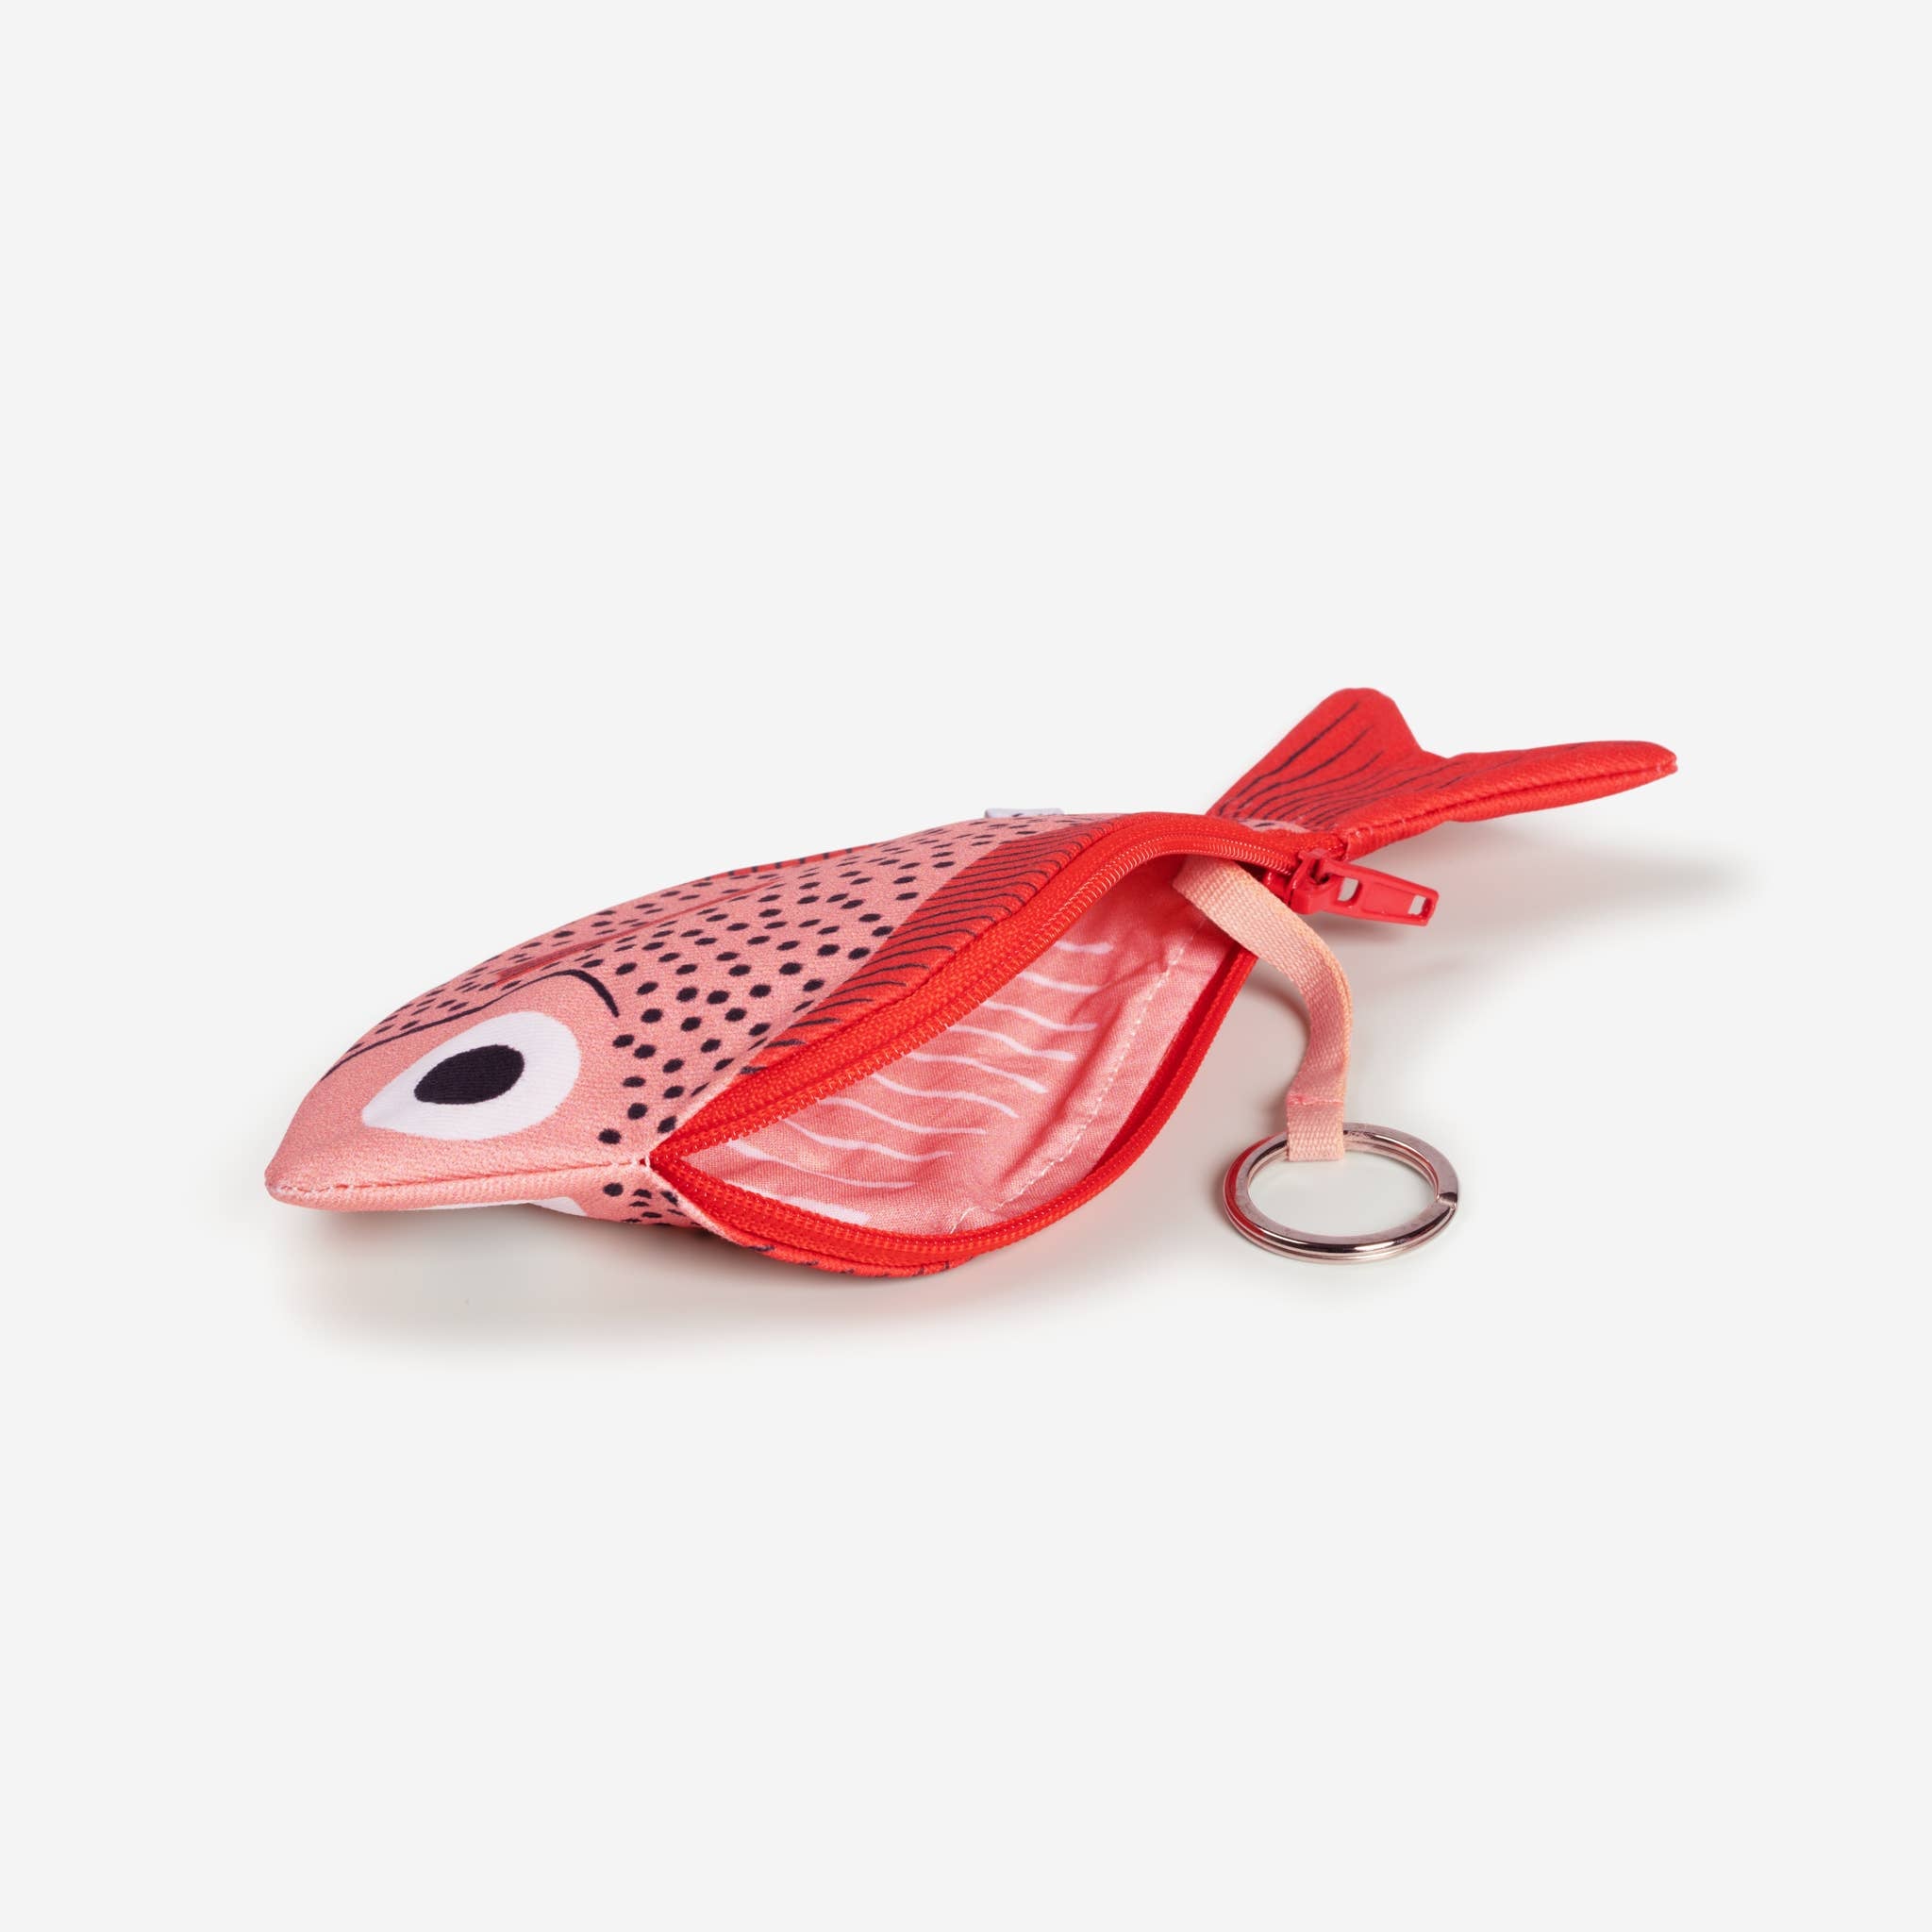 Pink Sweeper Fish purse or keychain - waterproof